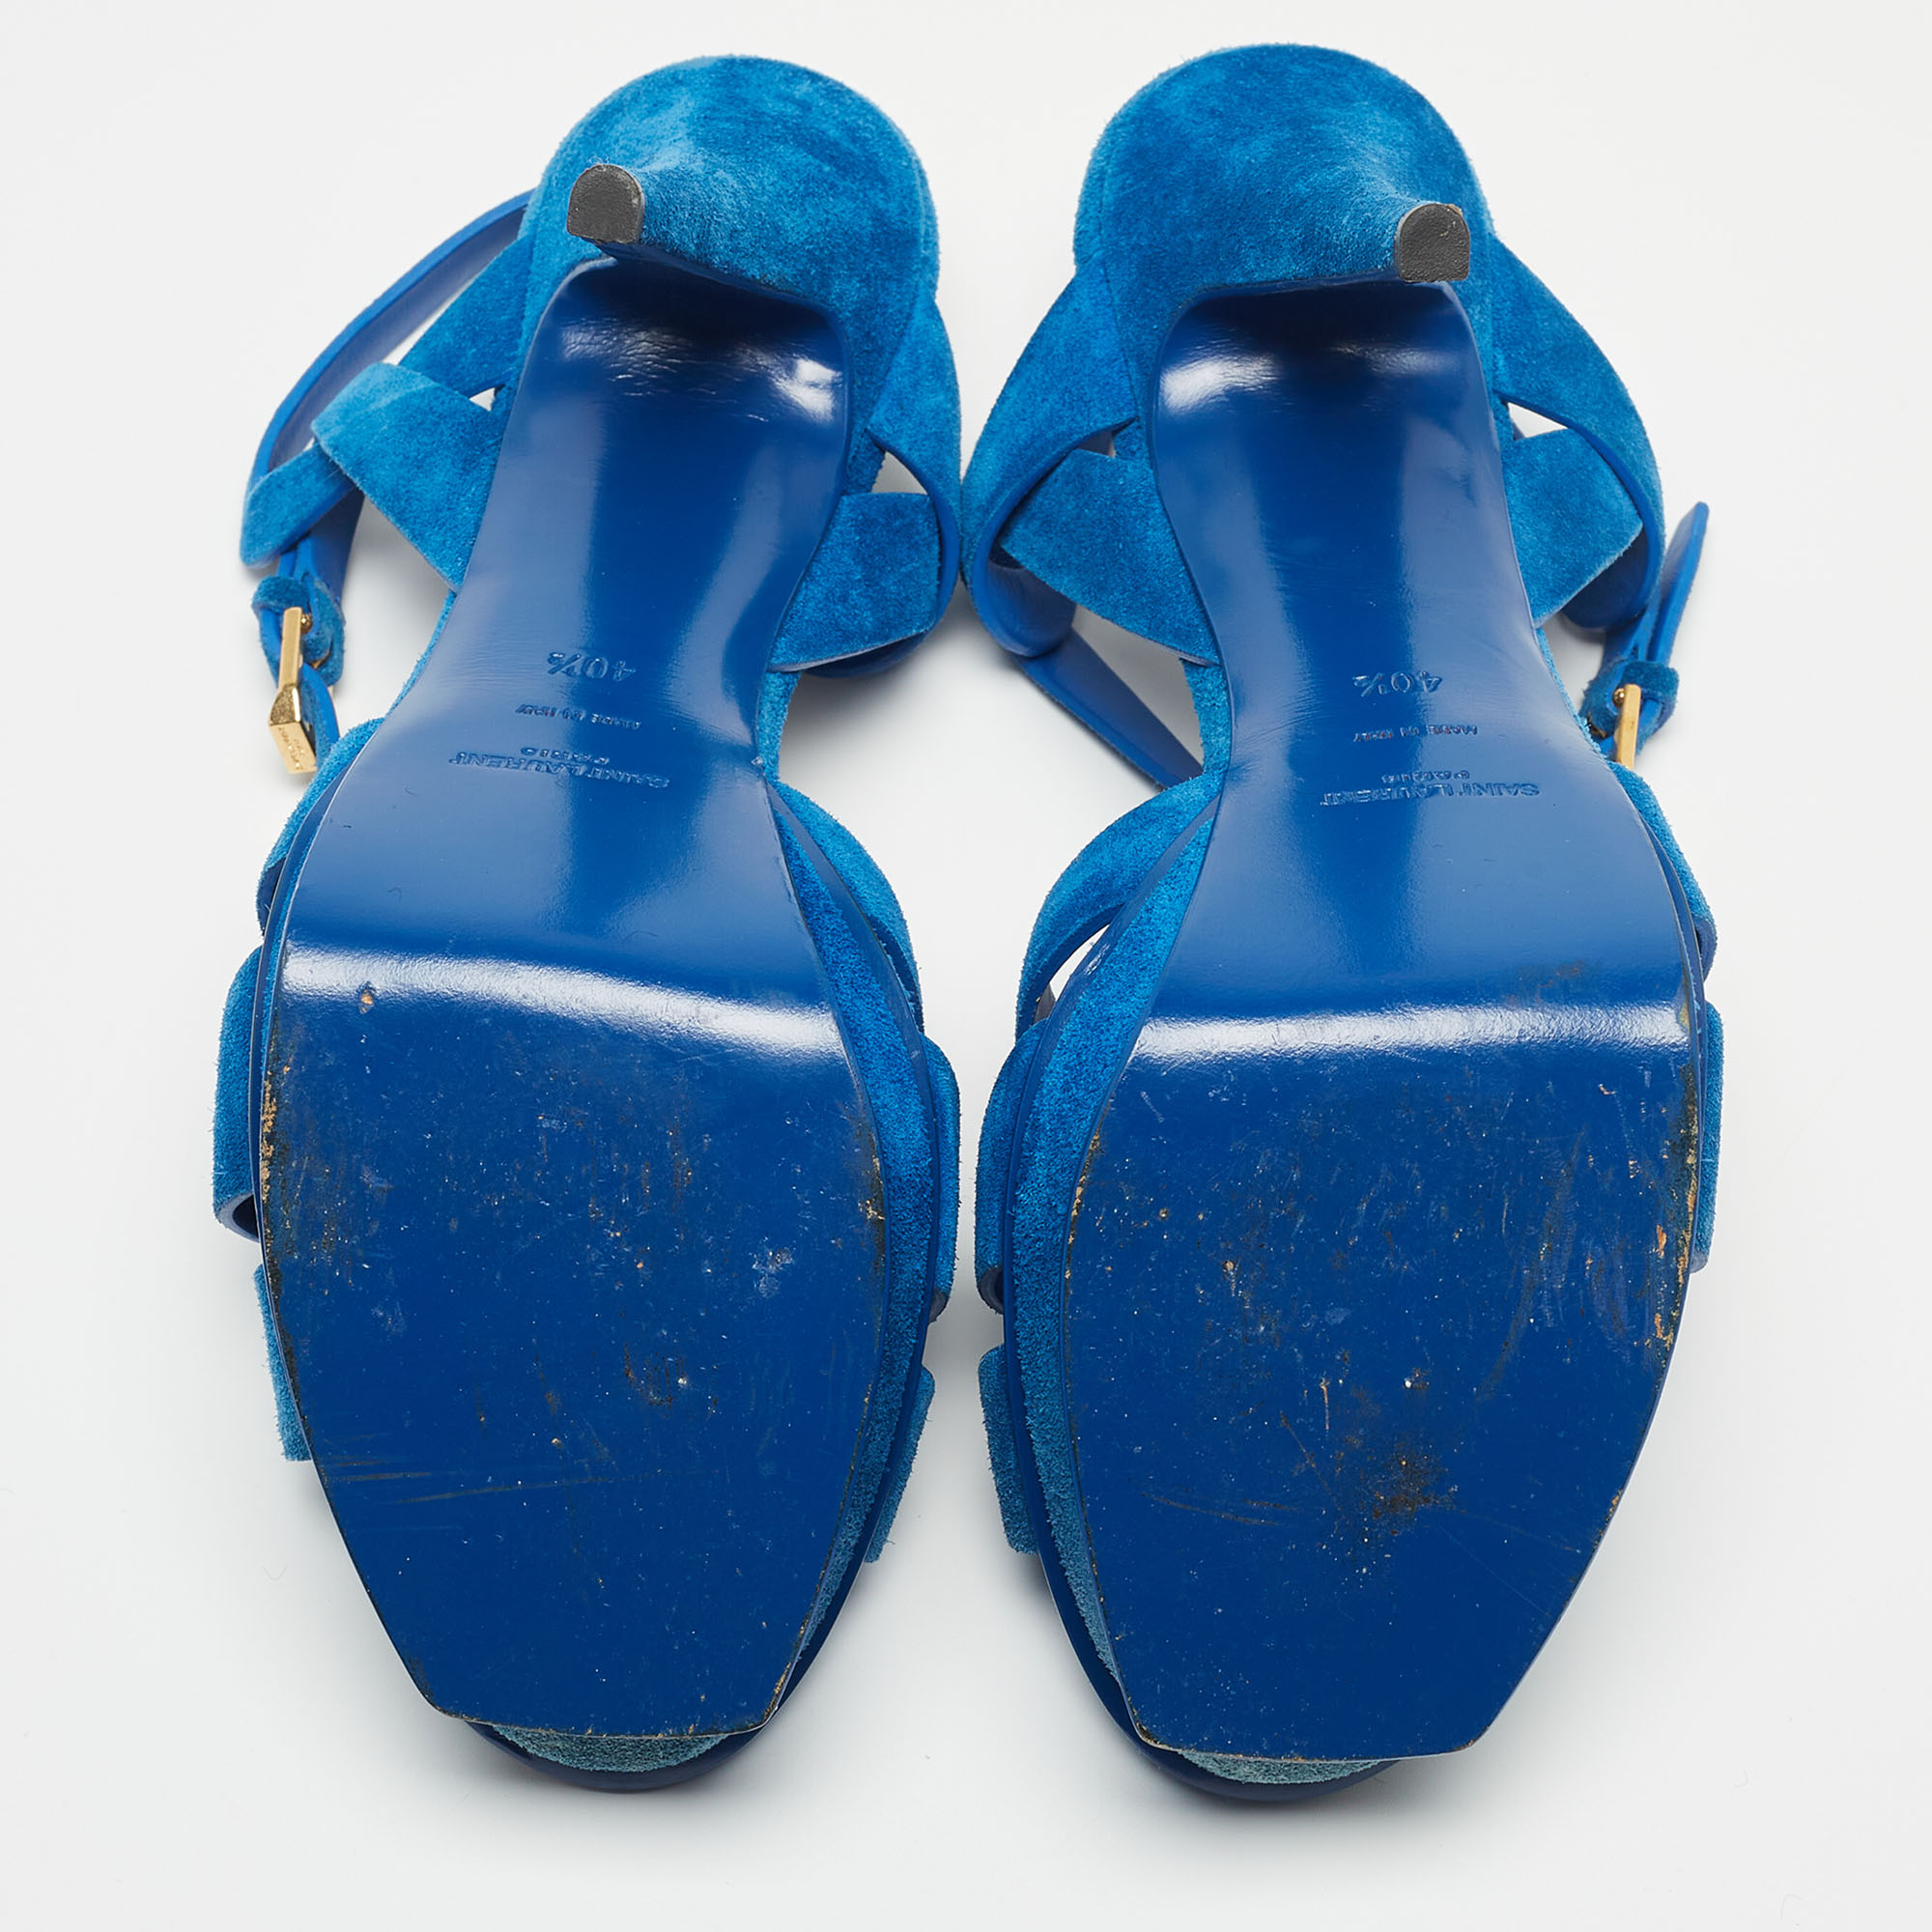 Yves Saint Laurent Blue Suede Tribute Ankle Strap Sandals Size 40.5